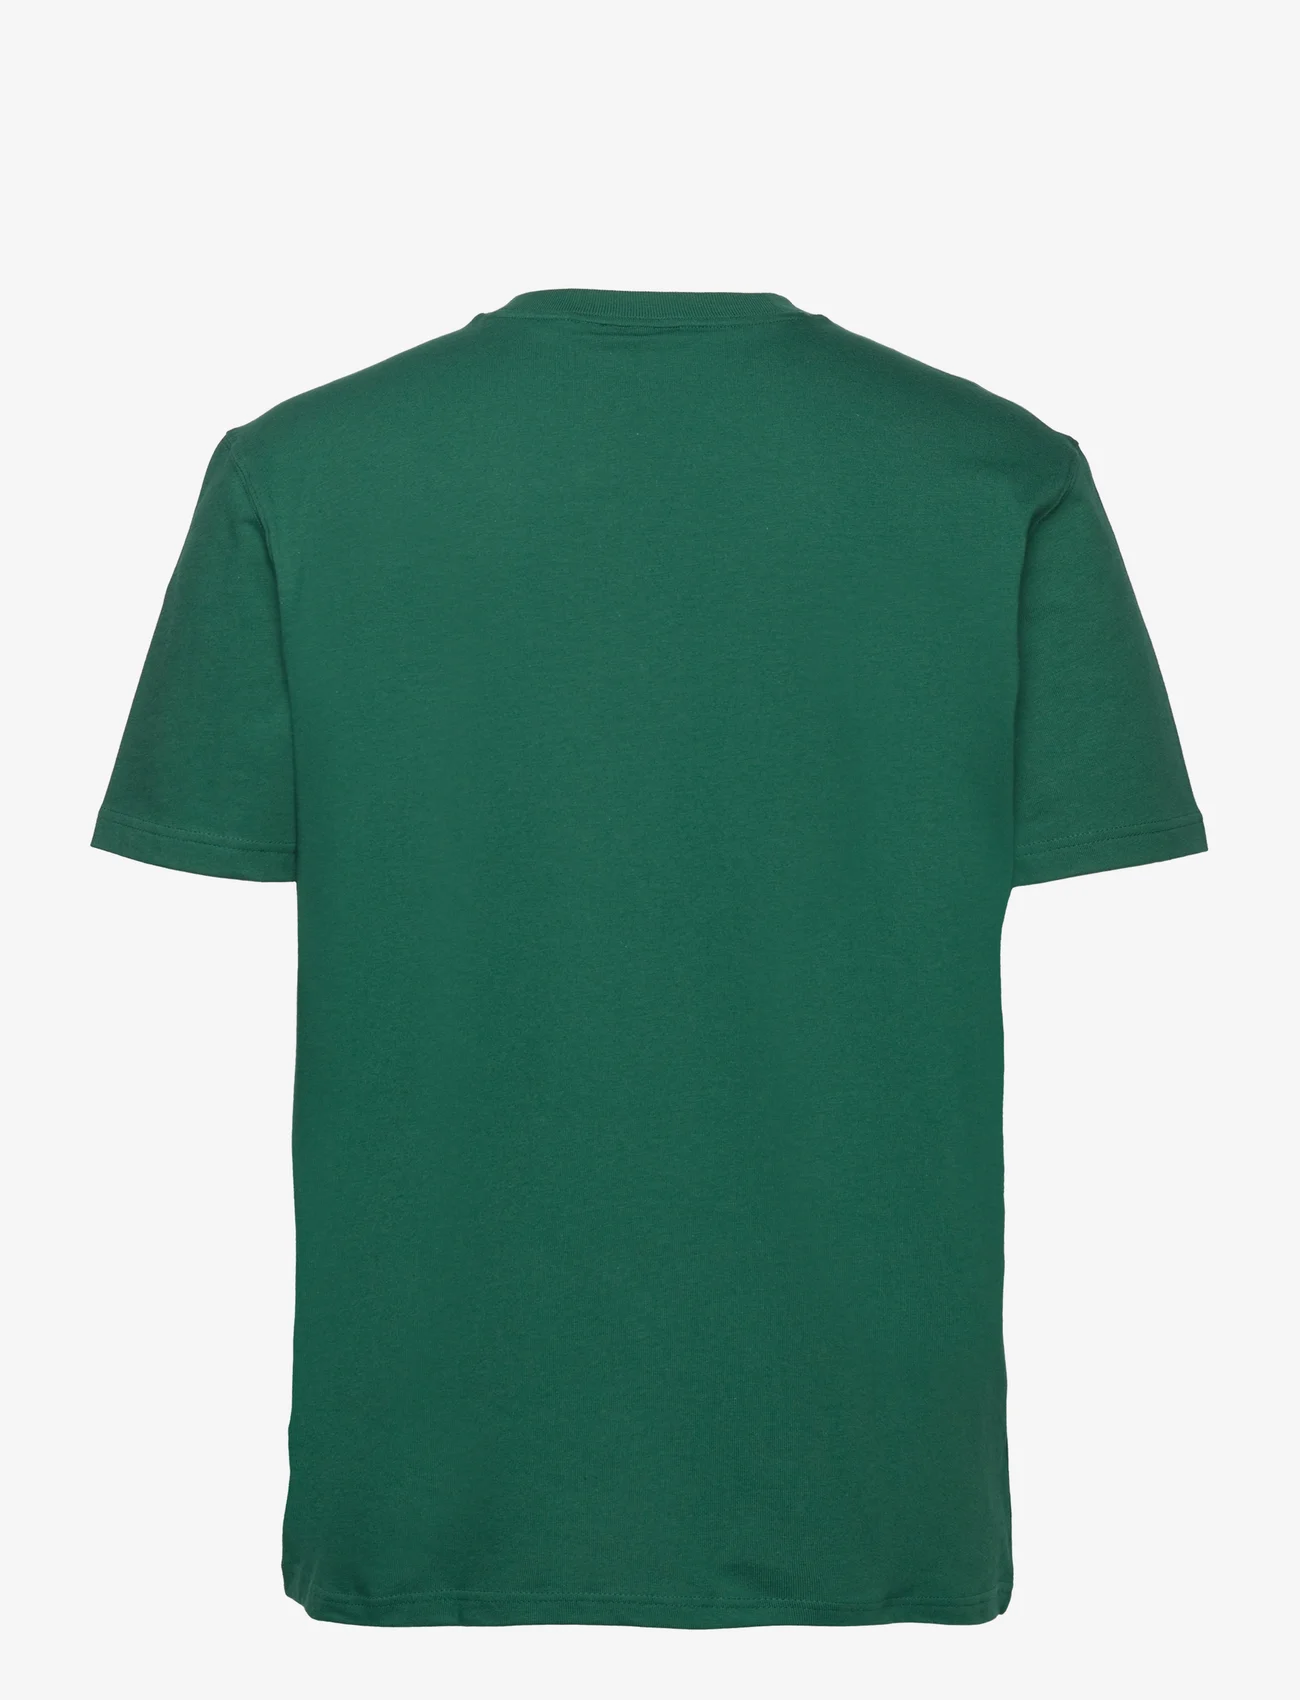 adidas Originals - adidas RIFTA Metro AAC T-Shirt - die niedrigsten preise - cgreen - 1